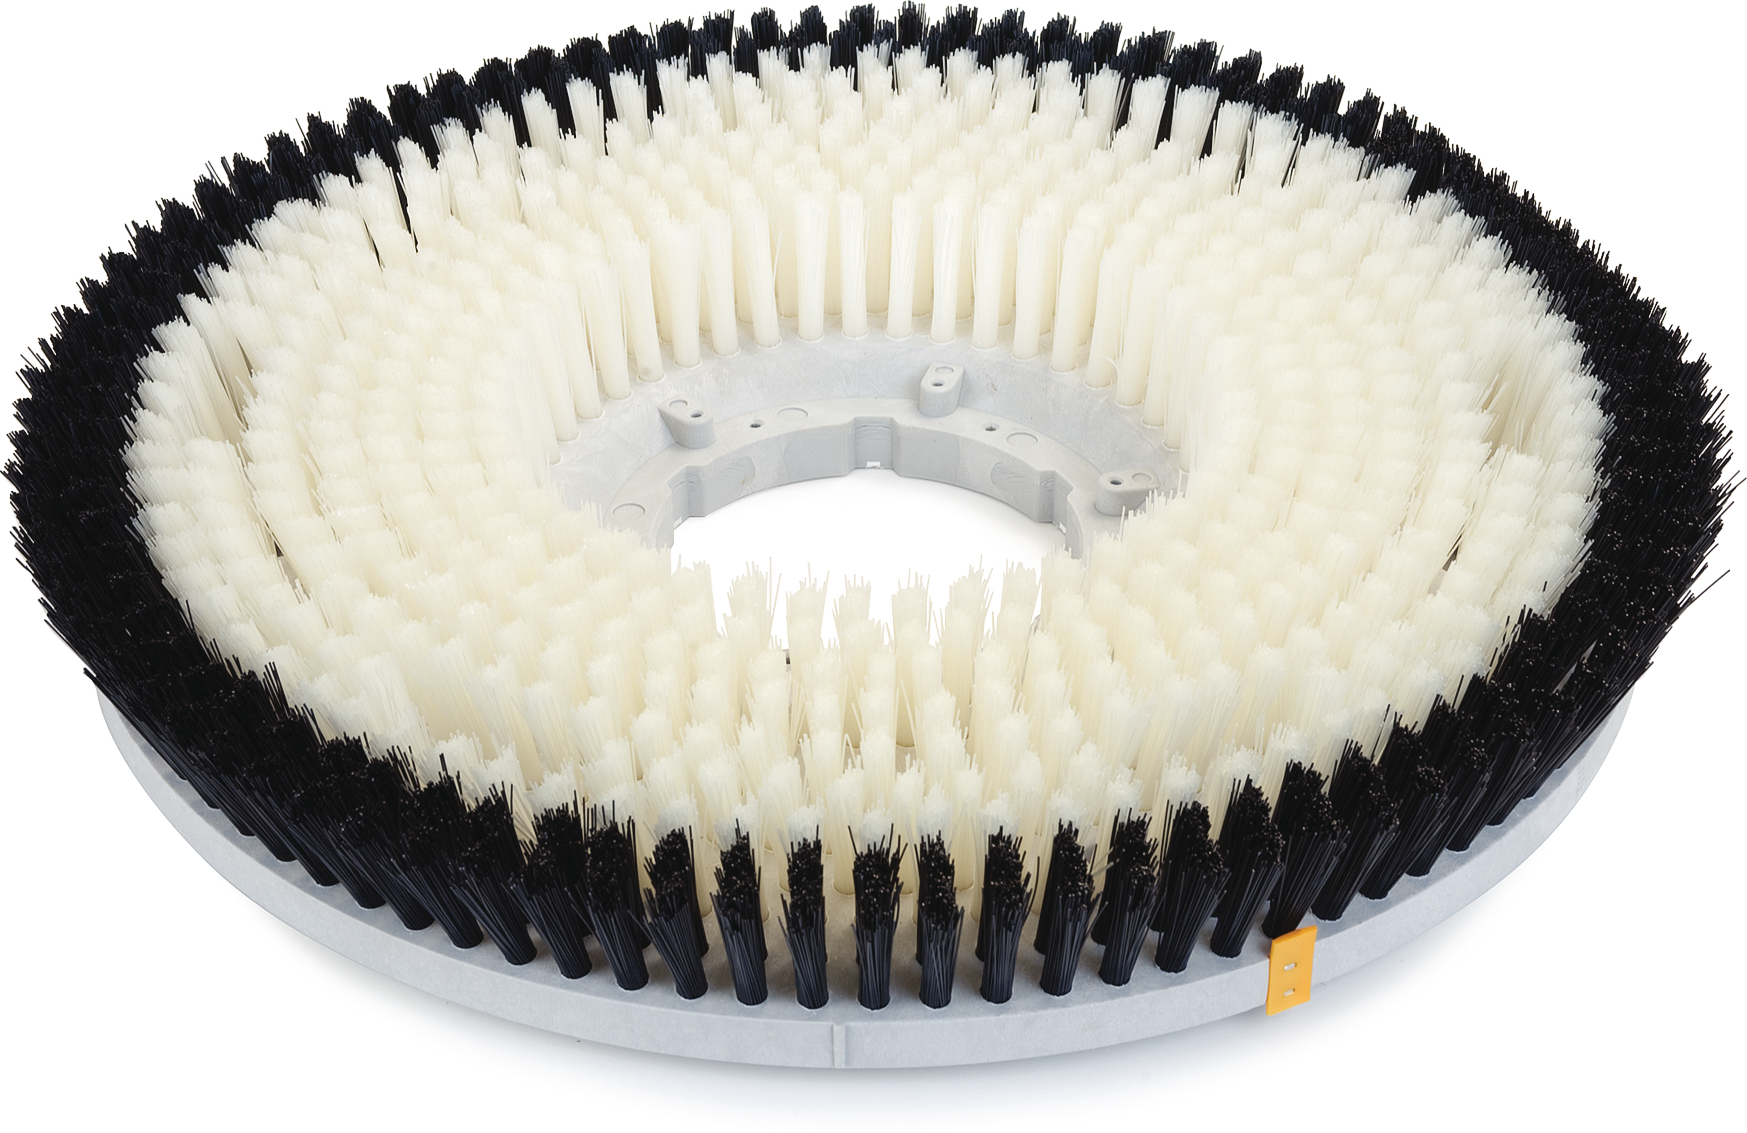 Colortech White-Black Karpet Kare Nylon Brush 12 - White-Black